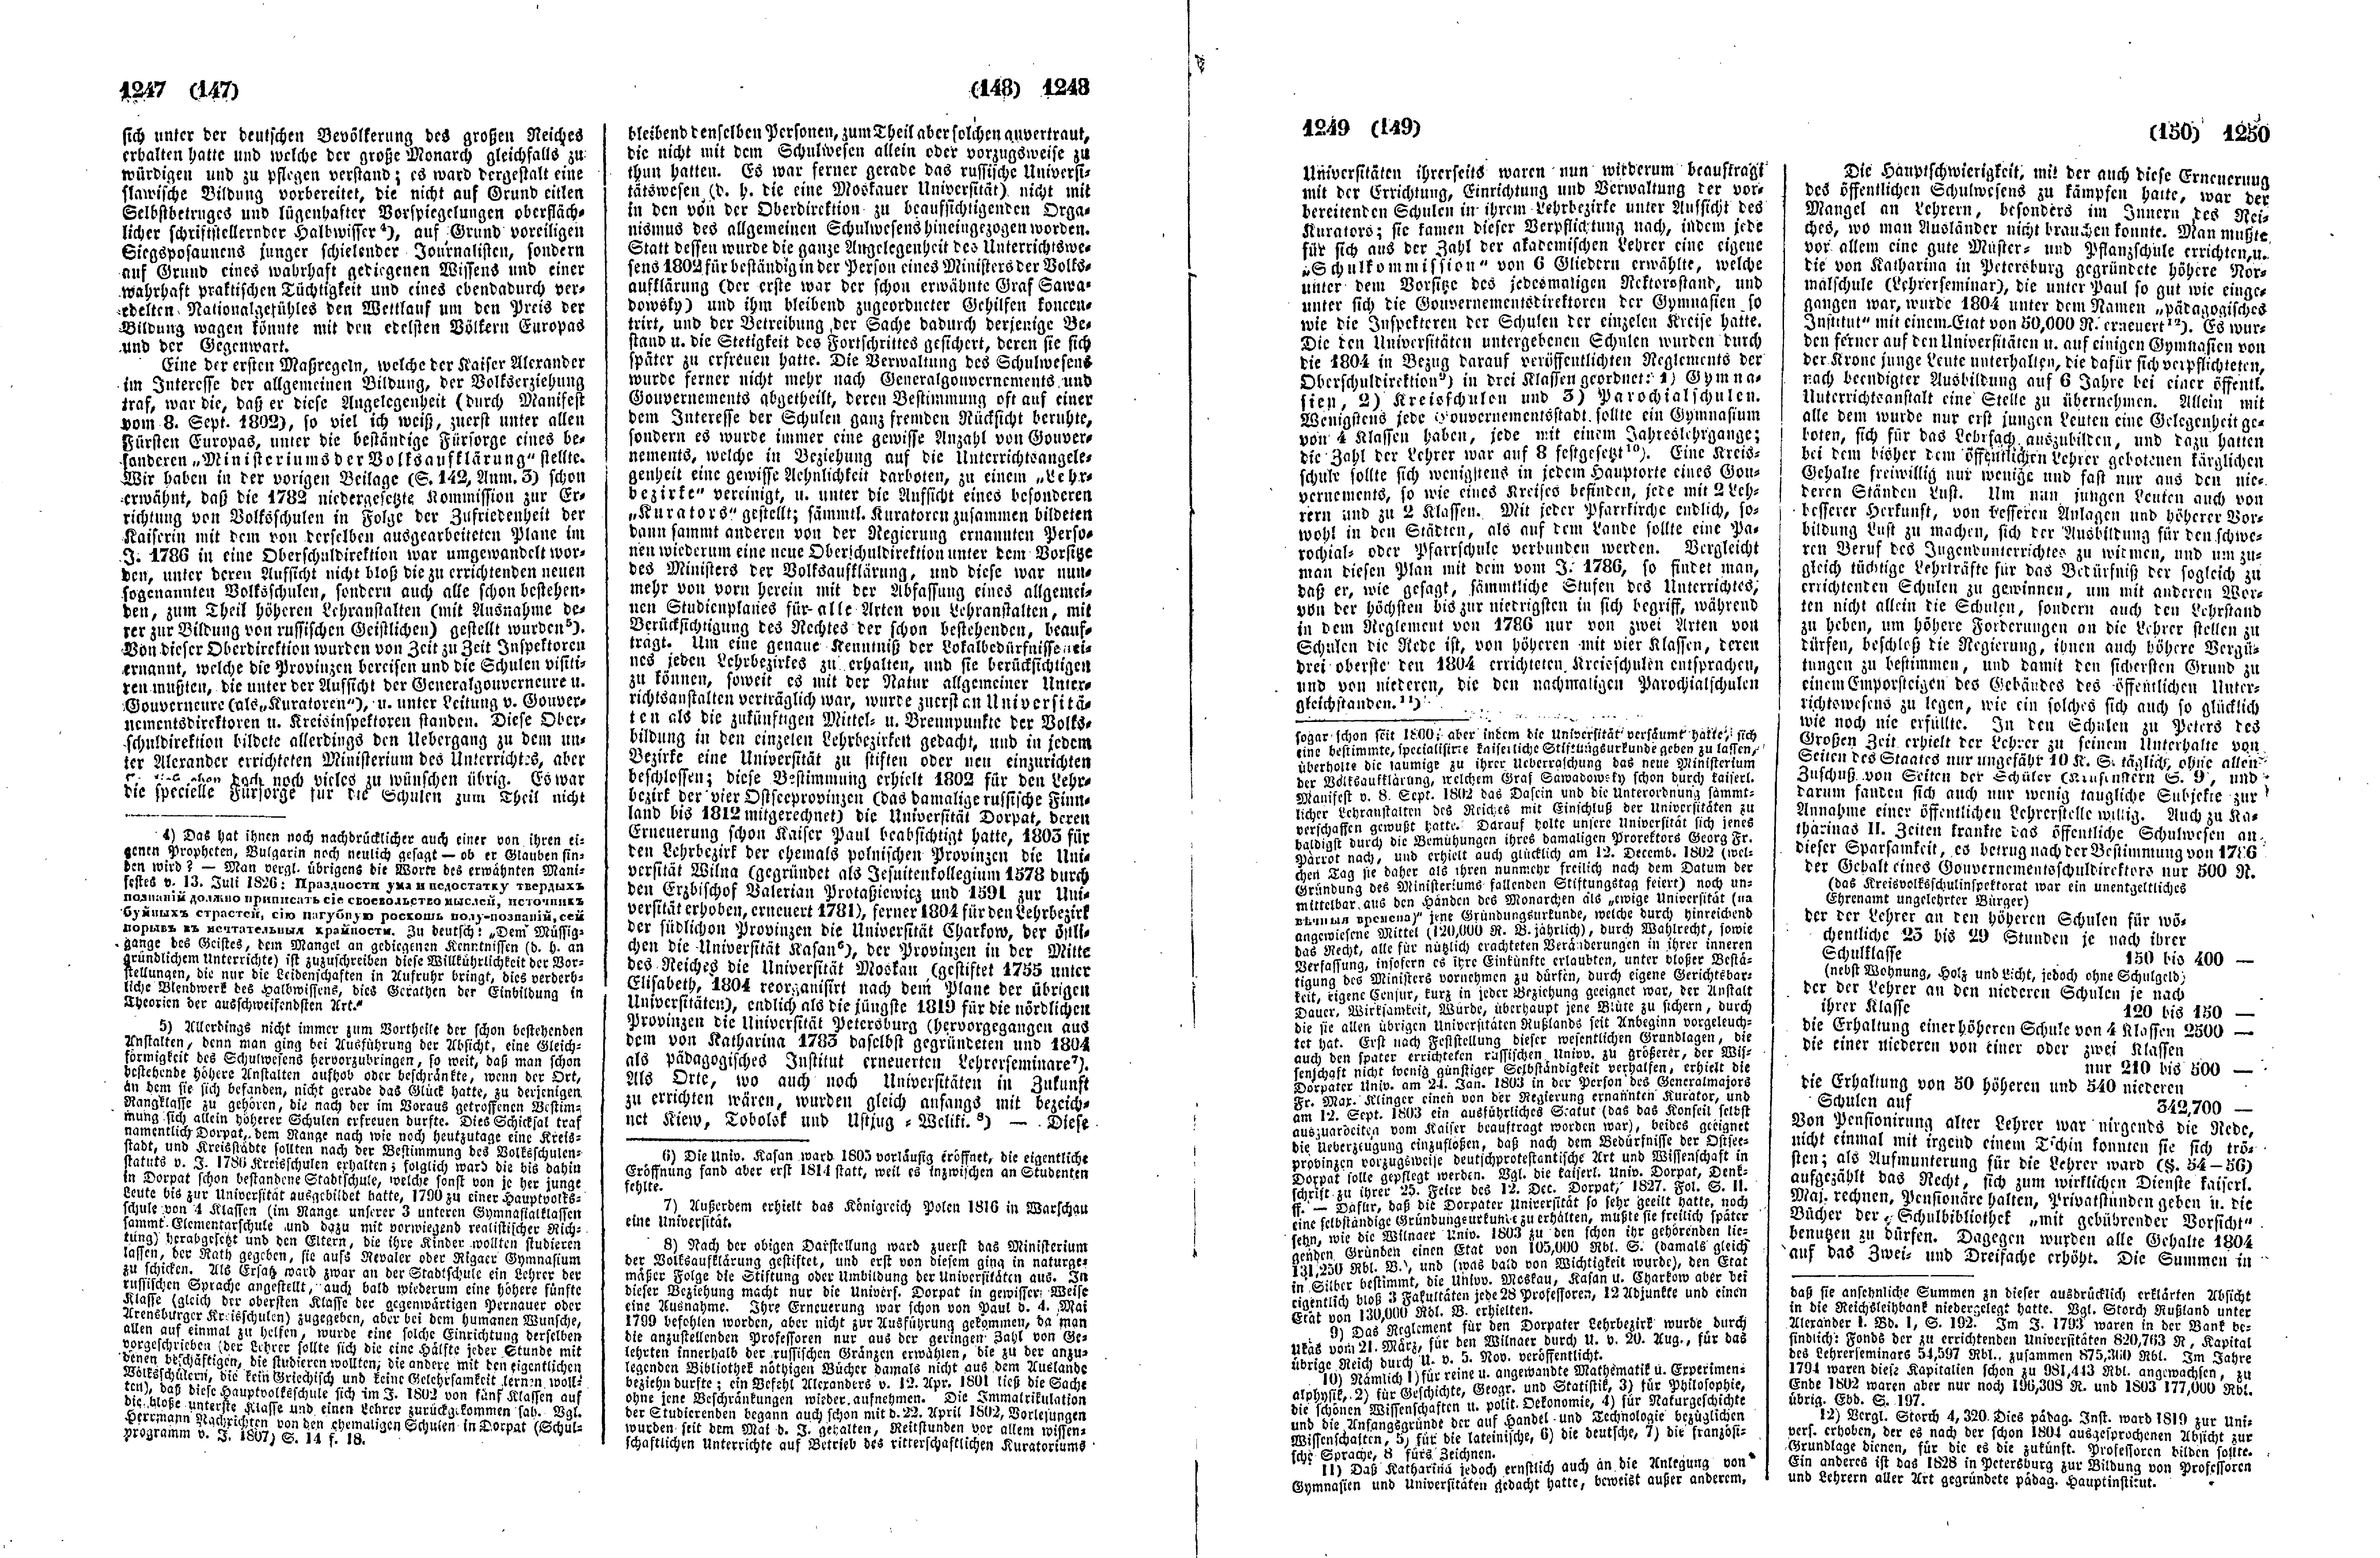 Das Inland [11] (1846) | 317. (1247-1250) Main body of text